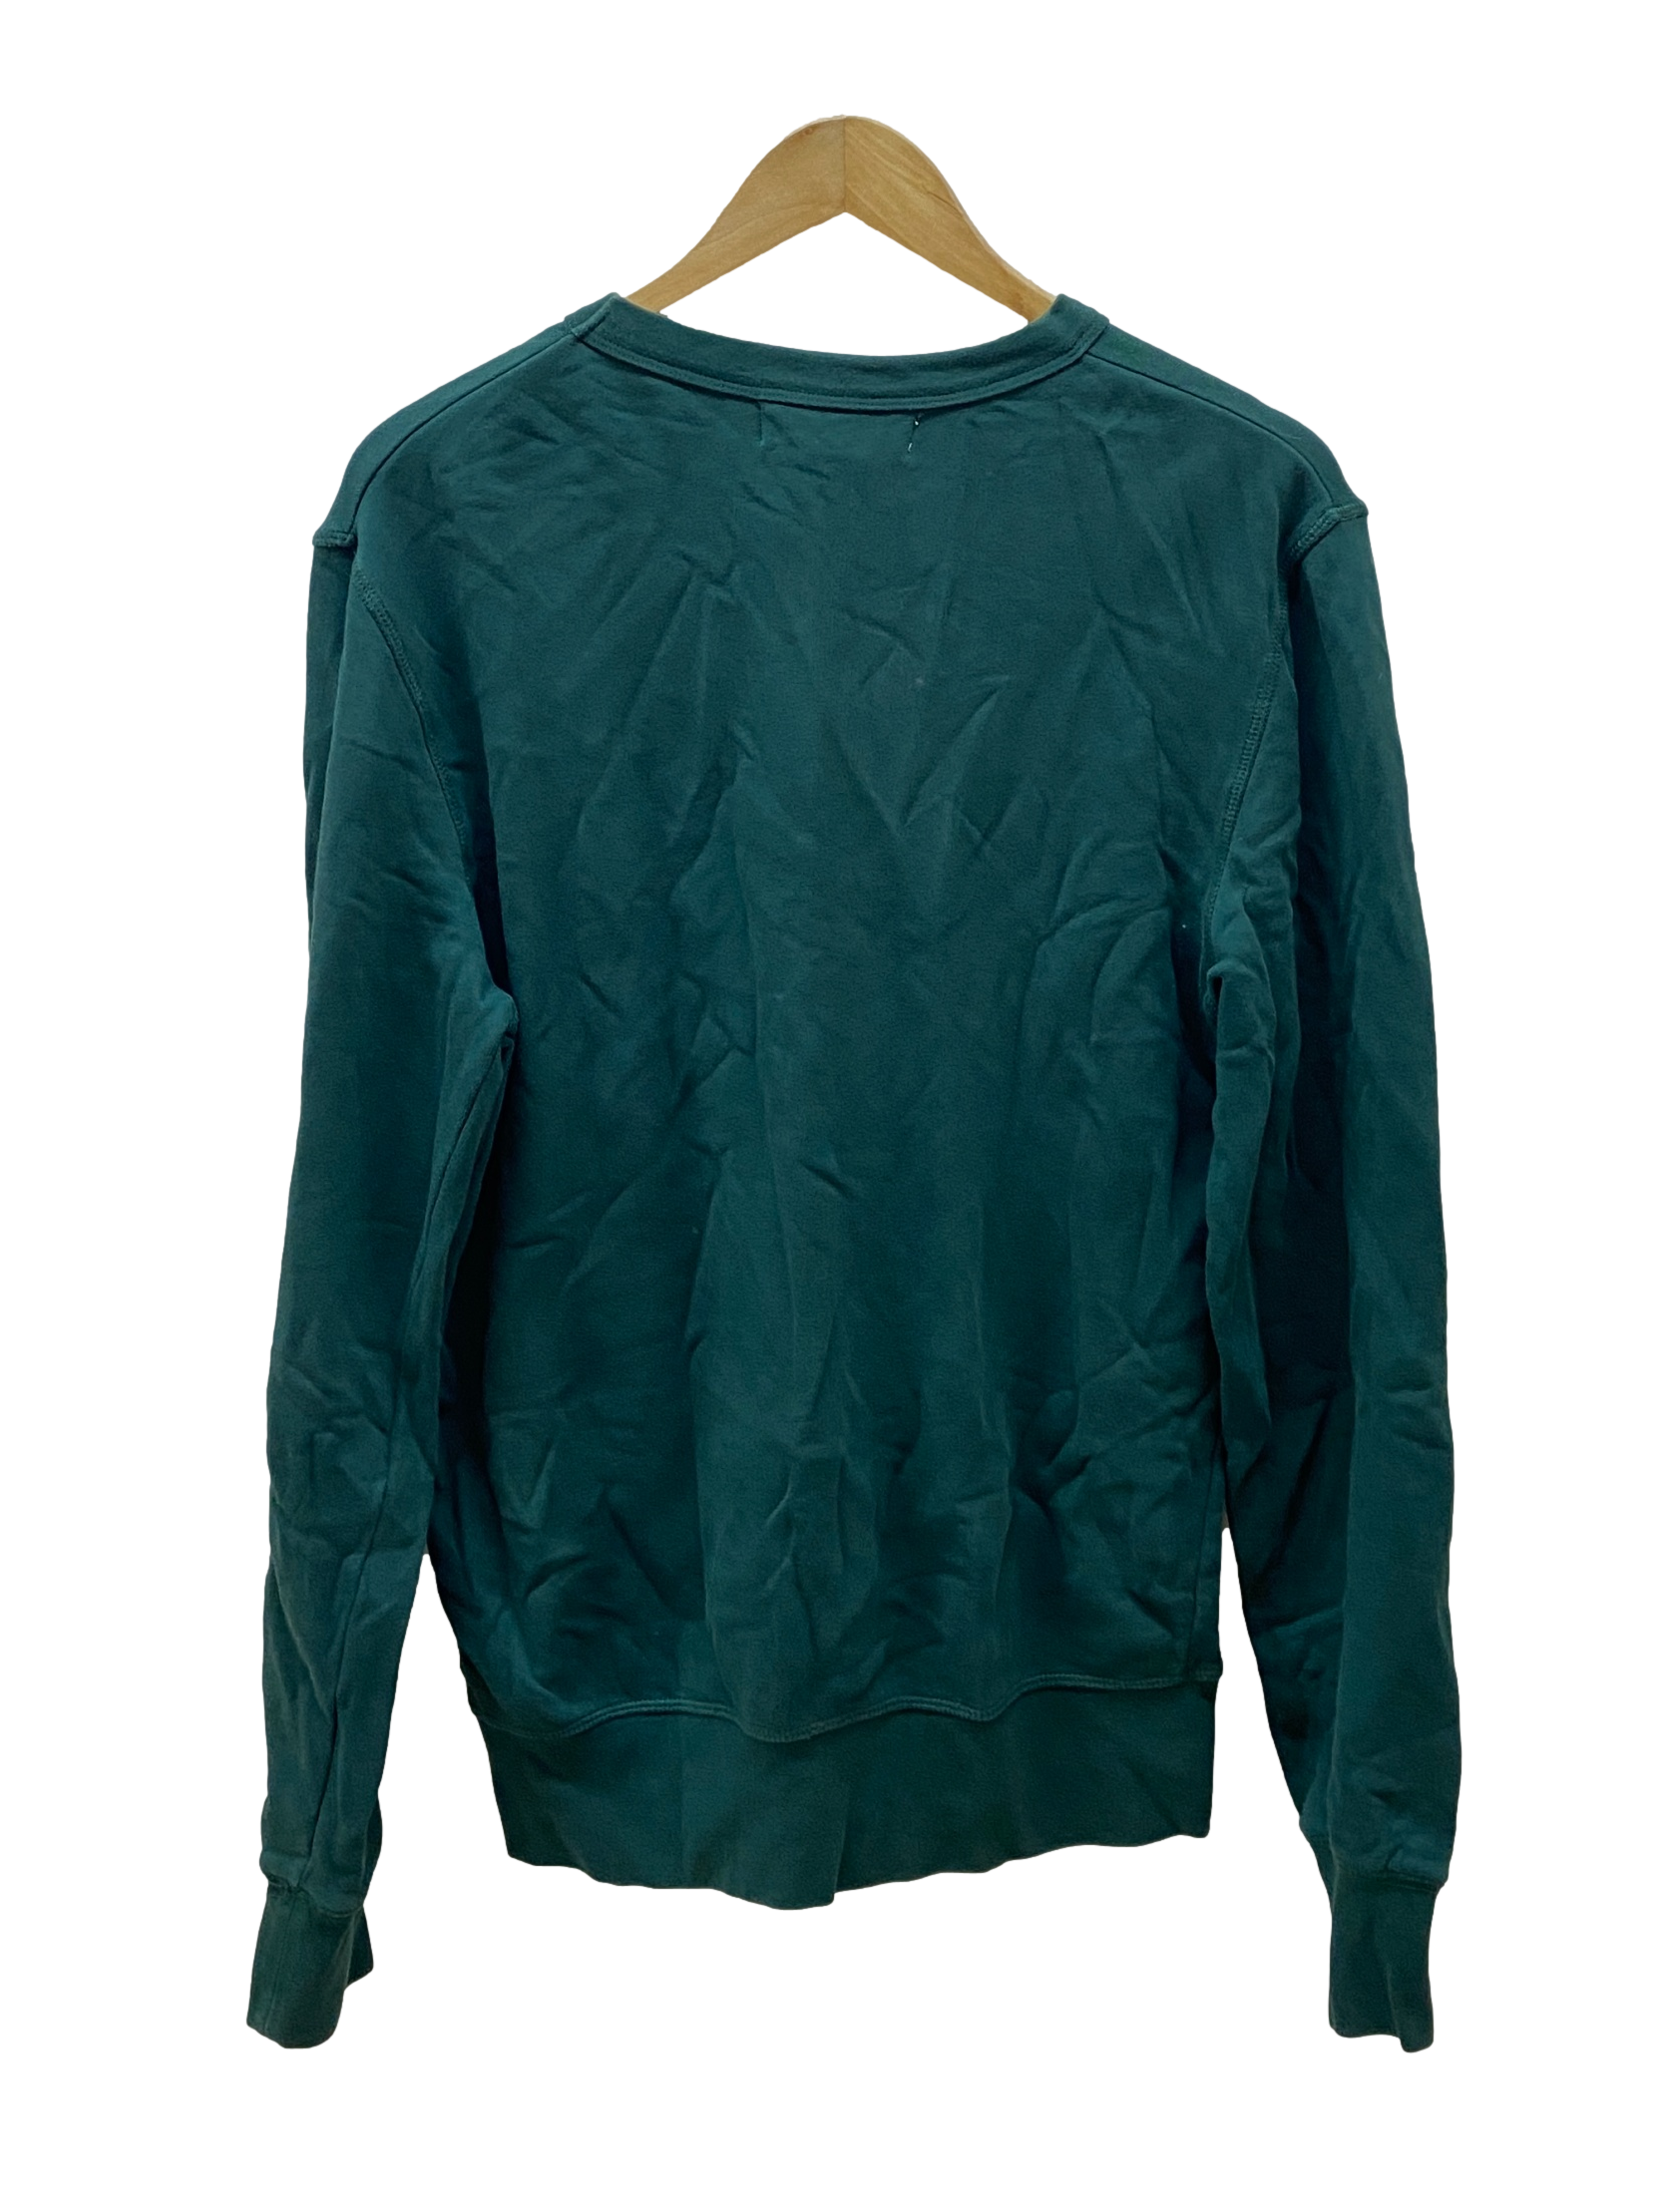 Ocean Green Sweater